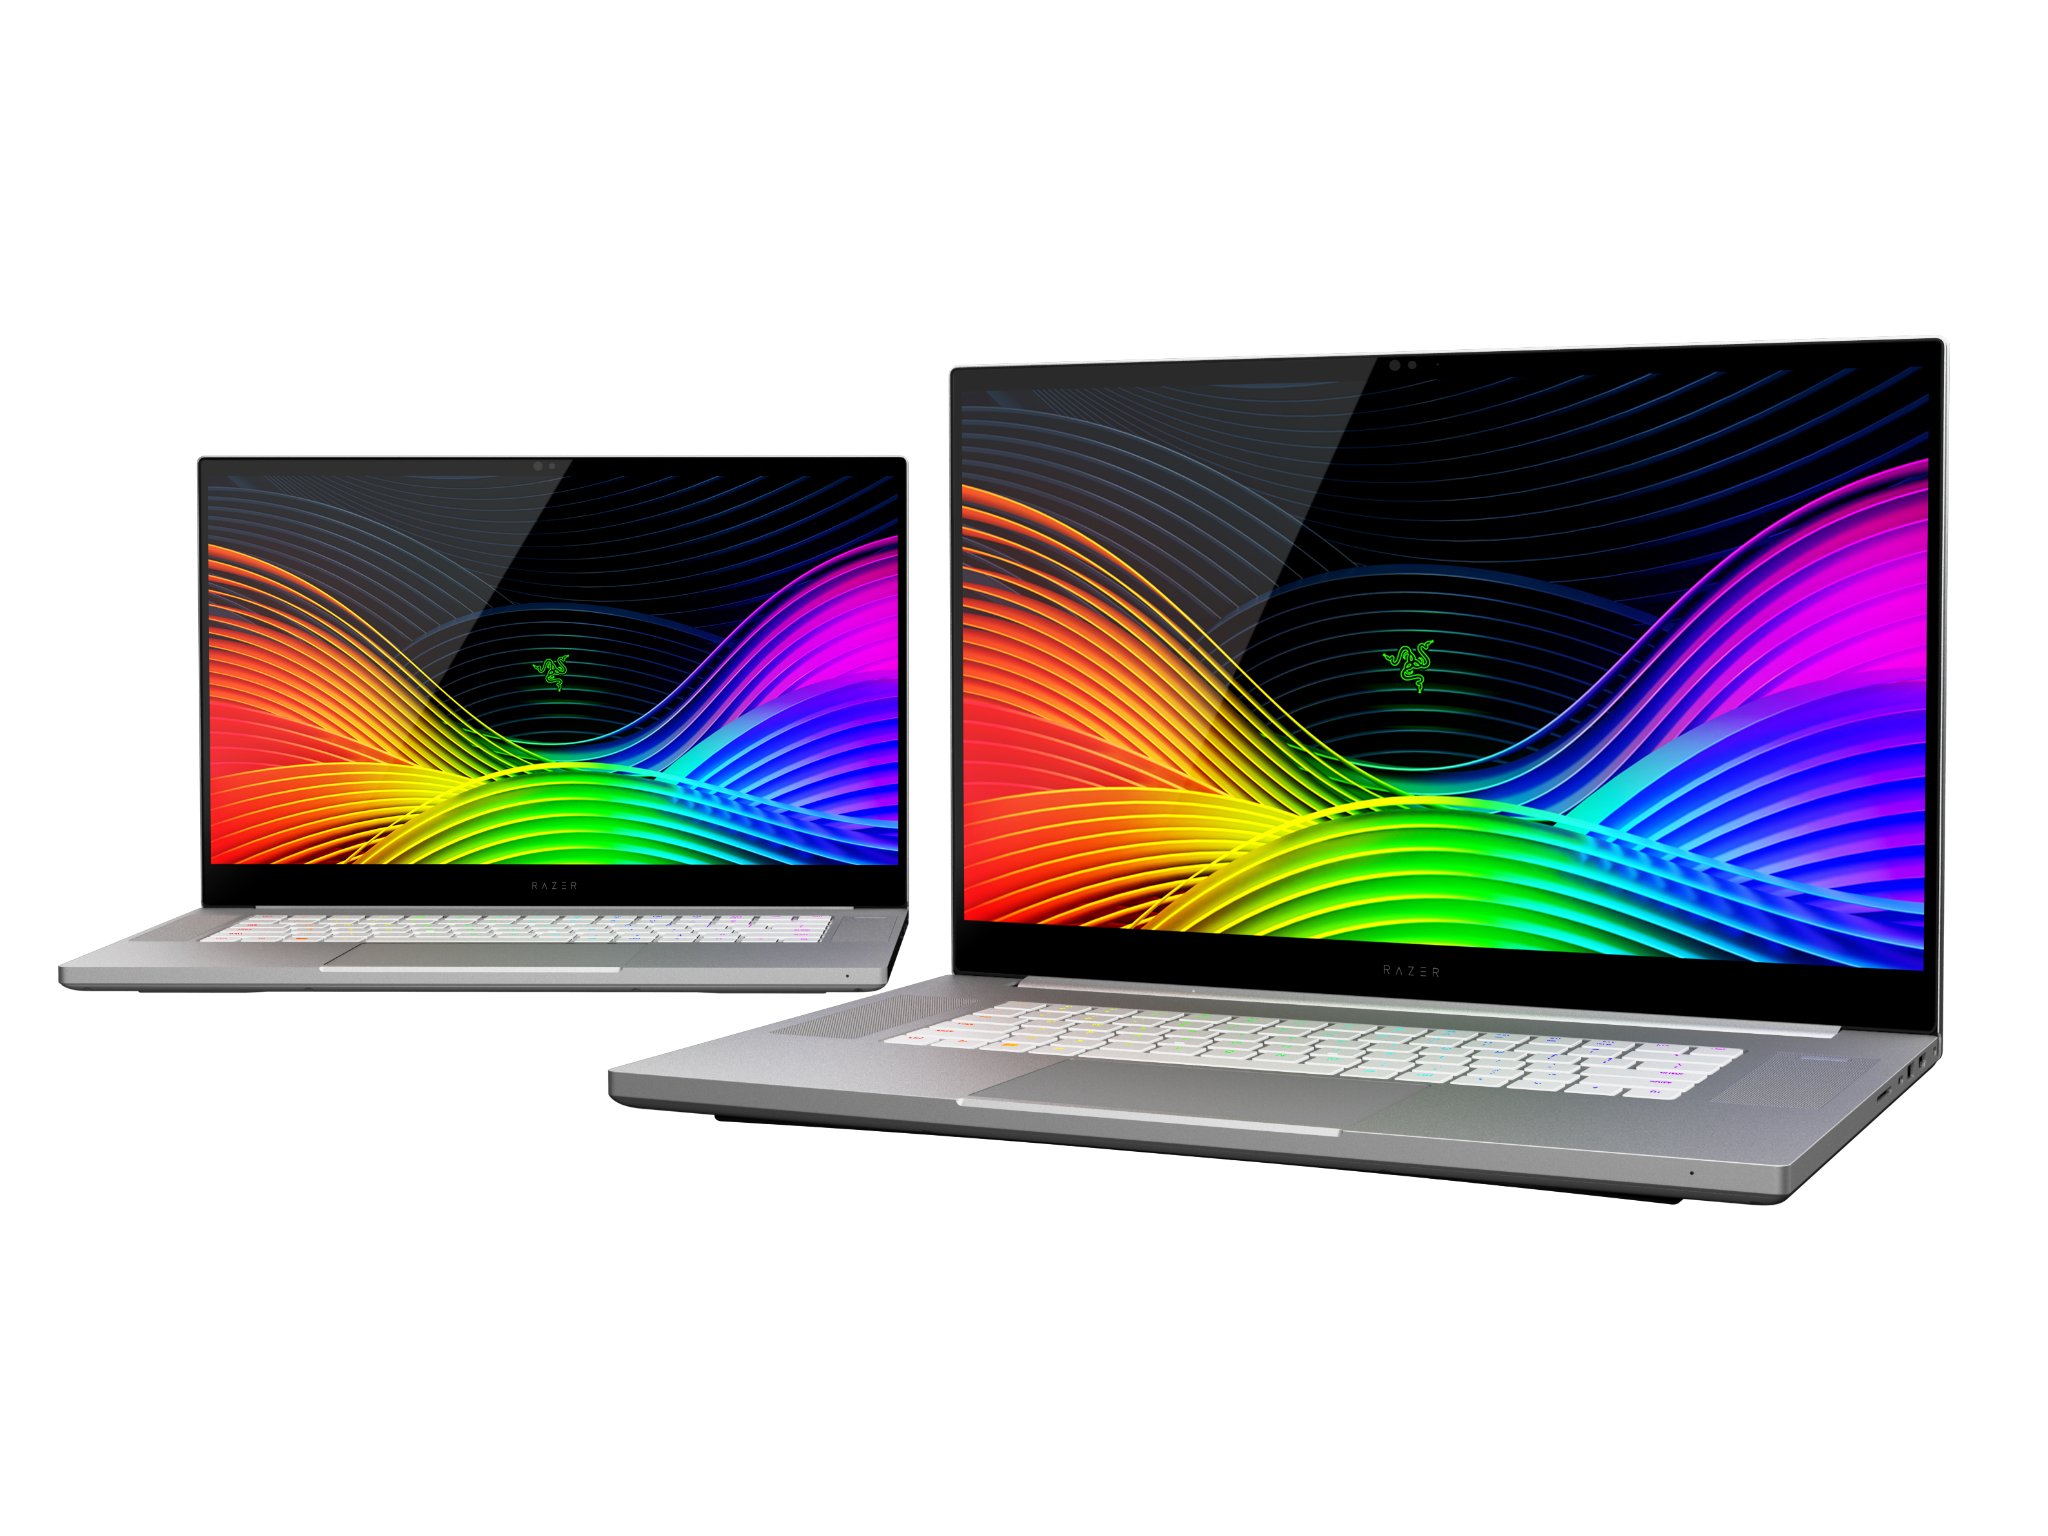 Nvidia announces RTX Studio laptops featuring Quadro RTX graphics